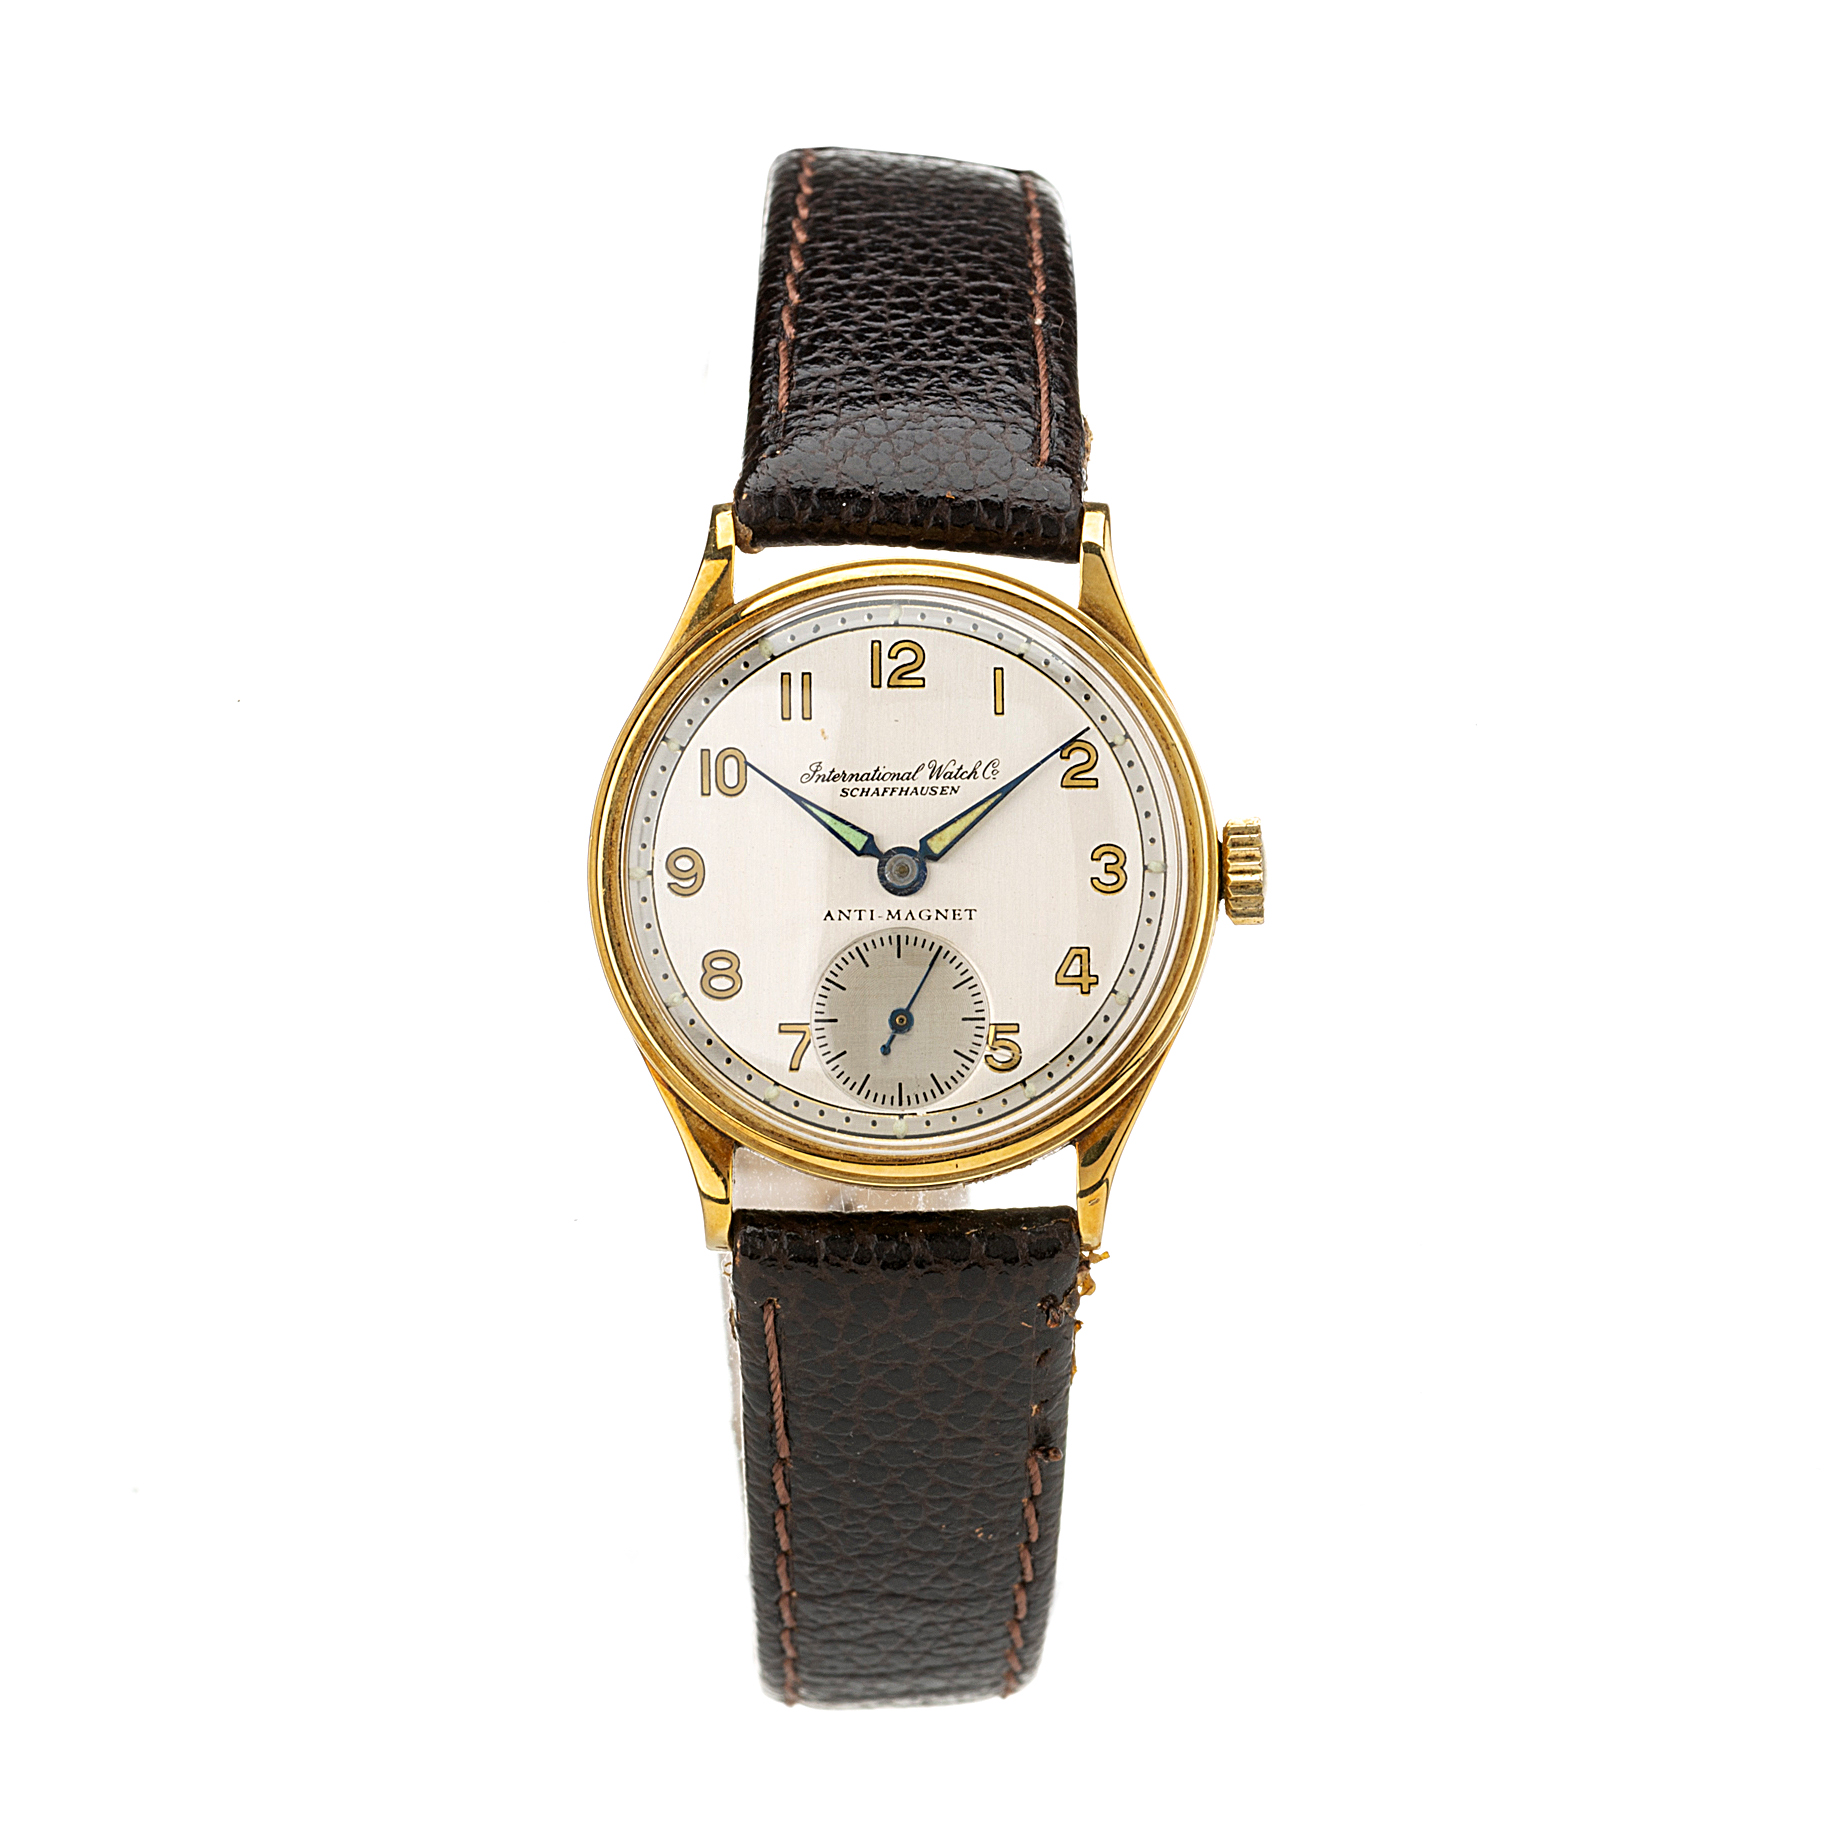 IWC, a 14ct gold wrist watch